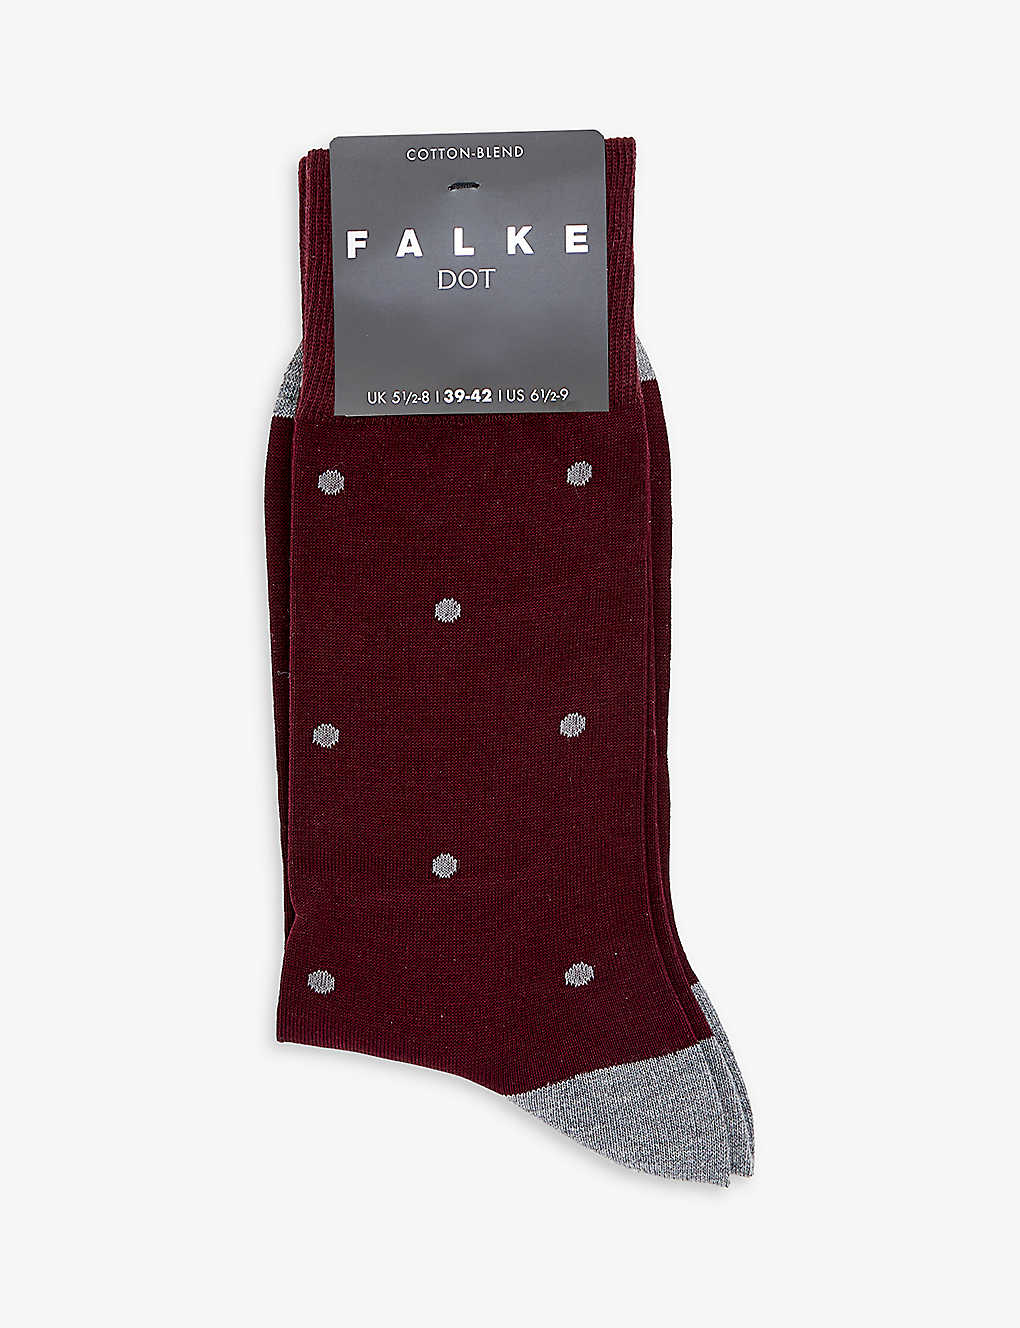 Falke Mens Barolo Dot Printed Cotton-blend Socks